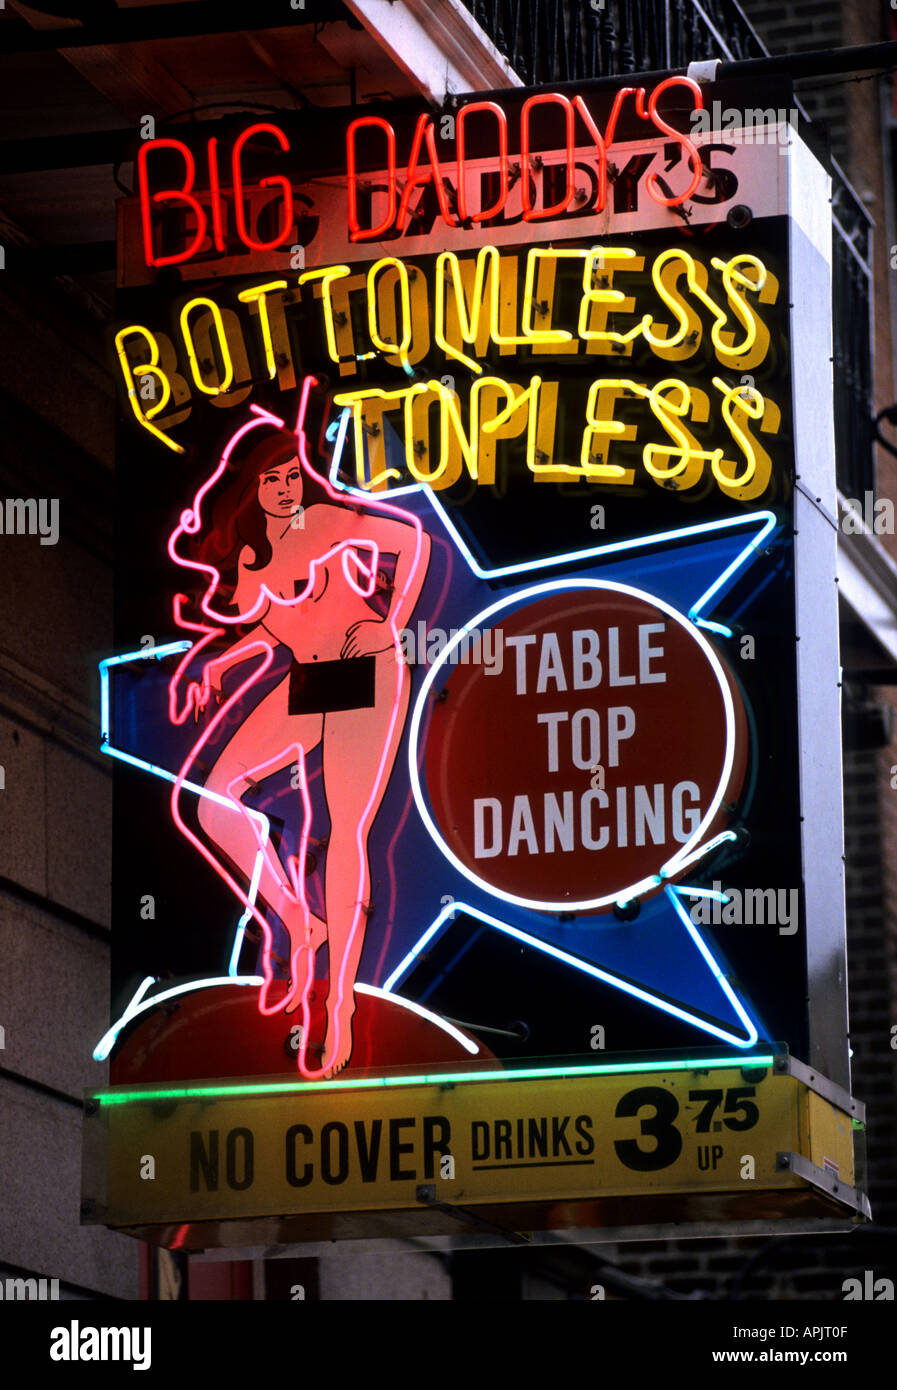 New orleans transvestite strip clubs.